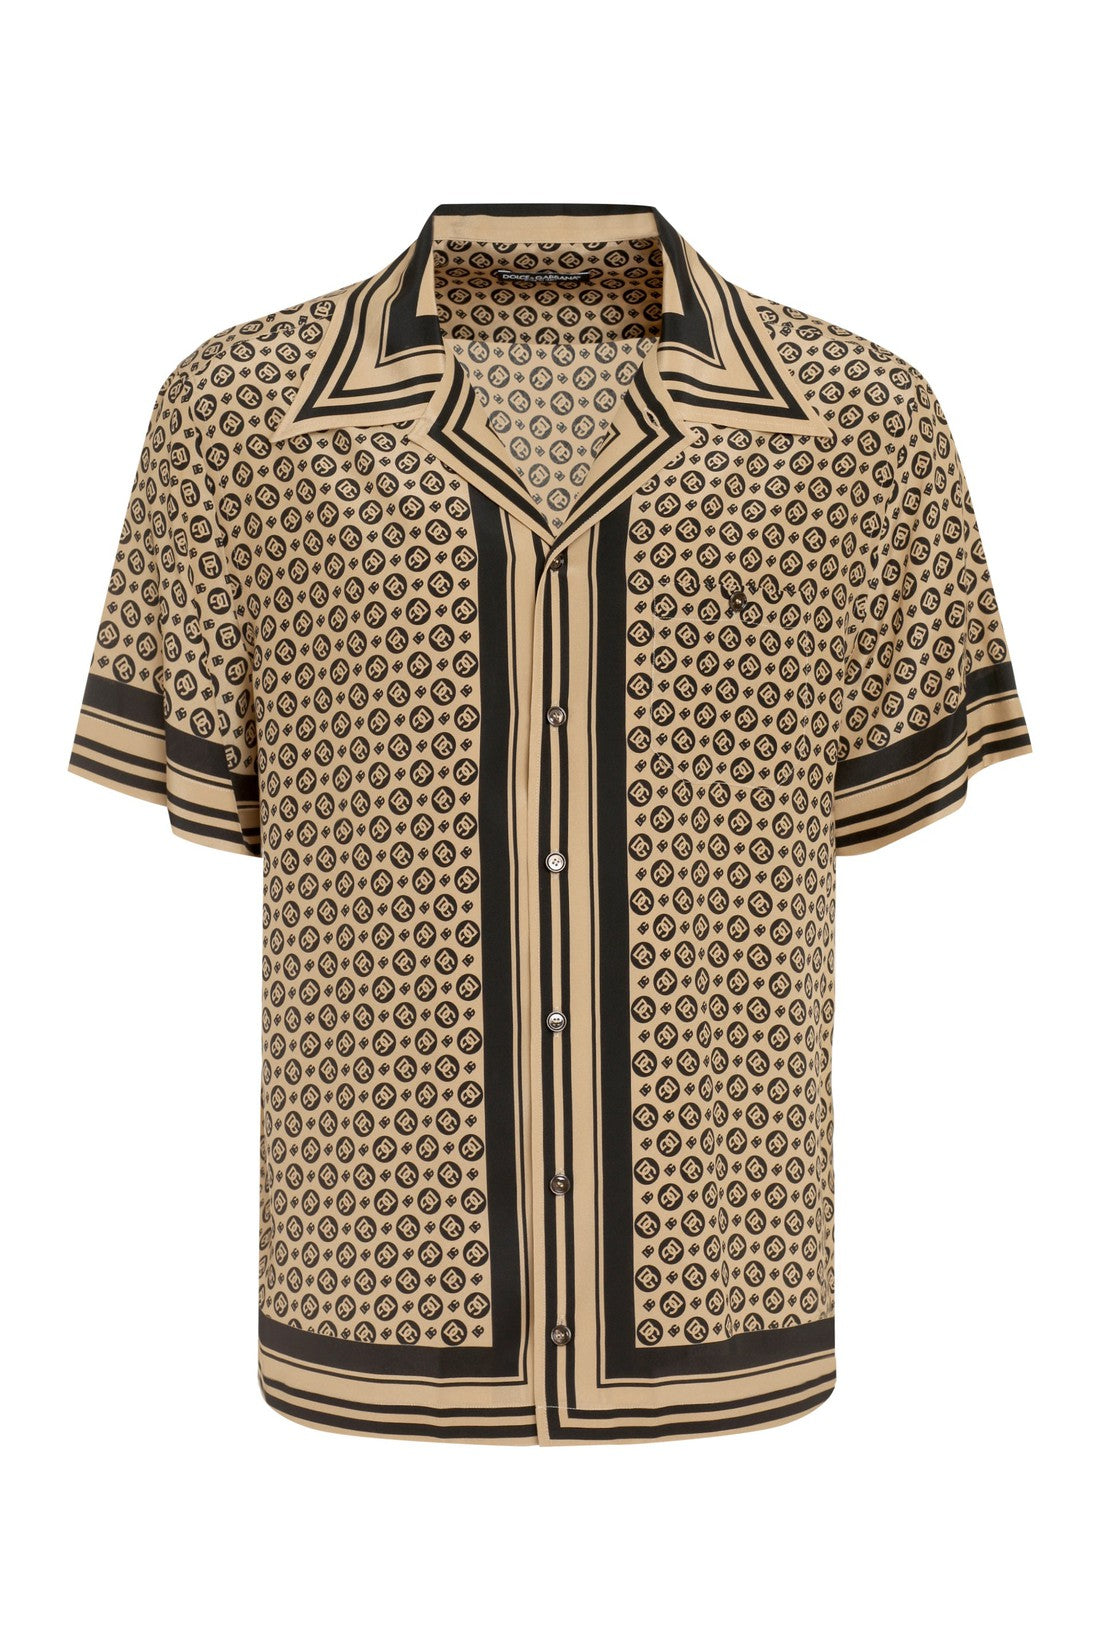 Dolce & Gabbana-OUTLET-SALE-Hawaii printed crêpe de chine shirt-ARCHIVIST